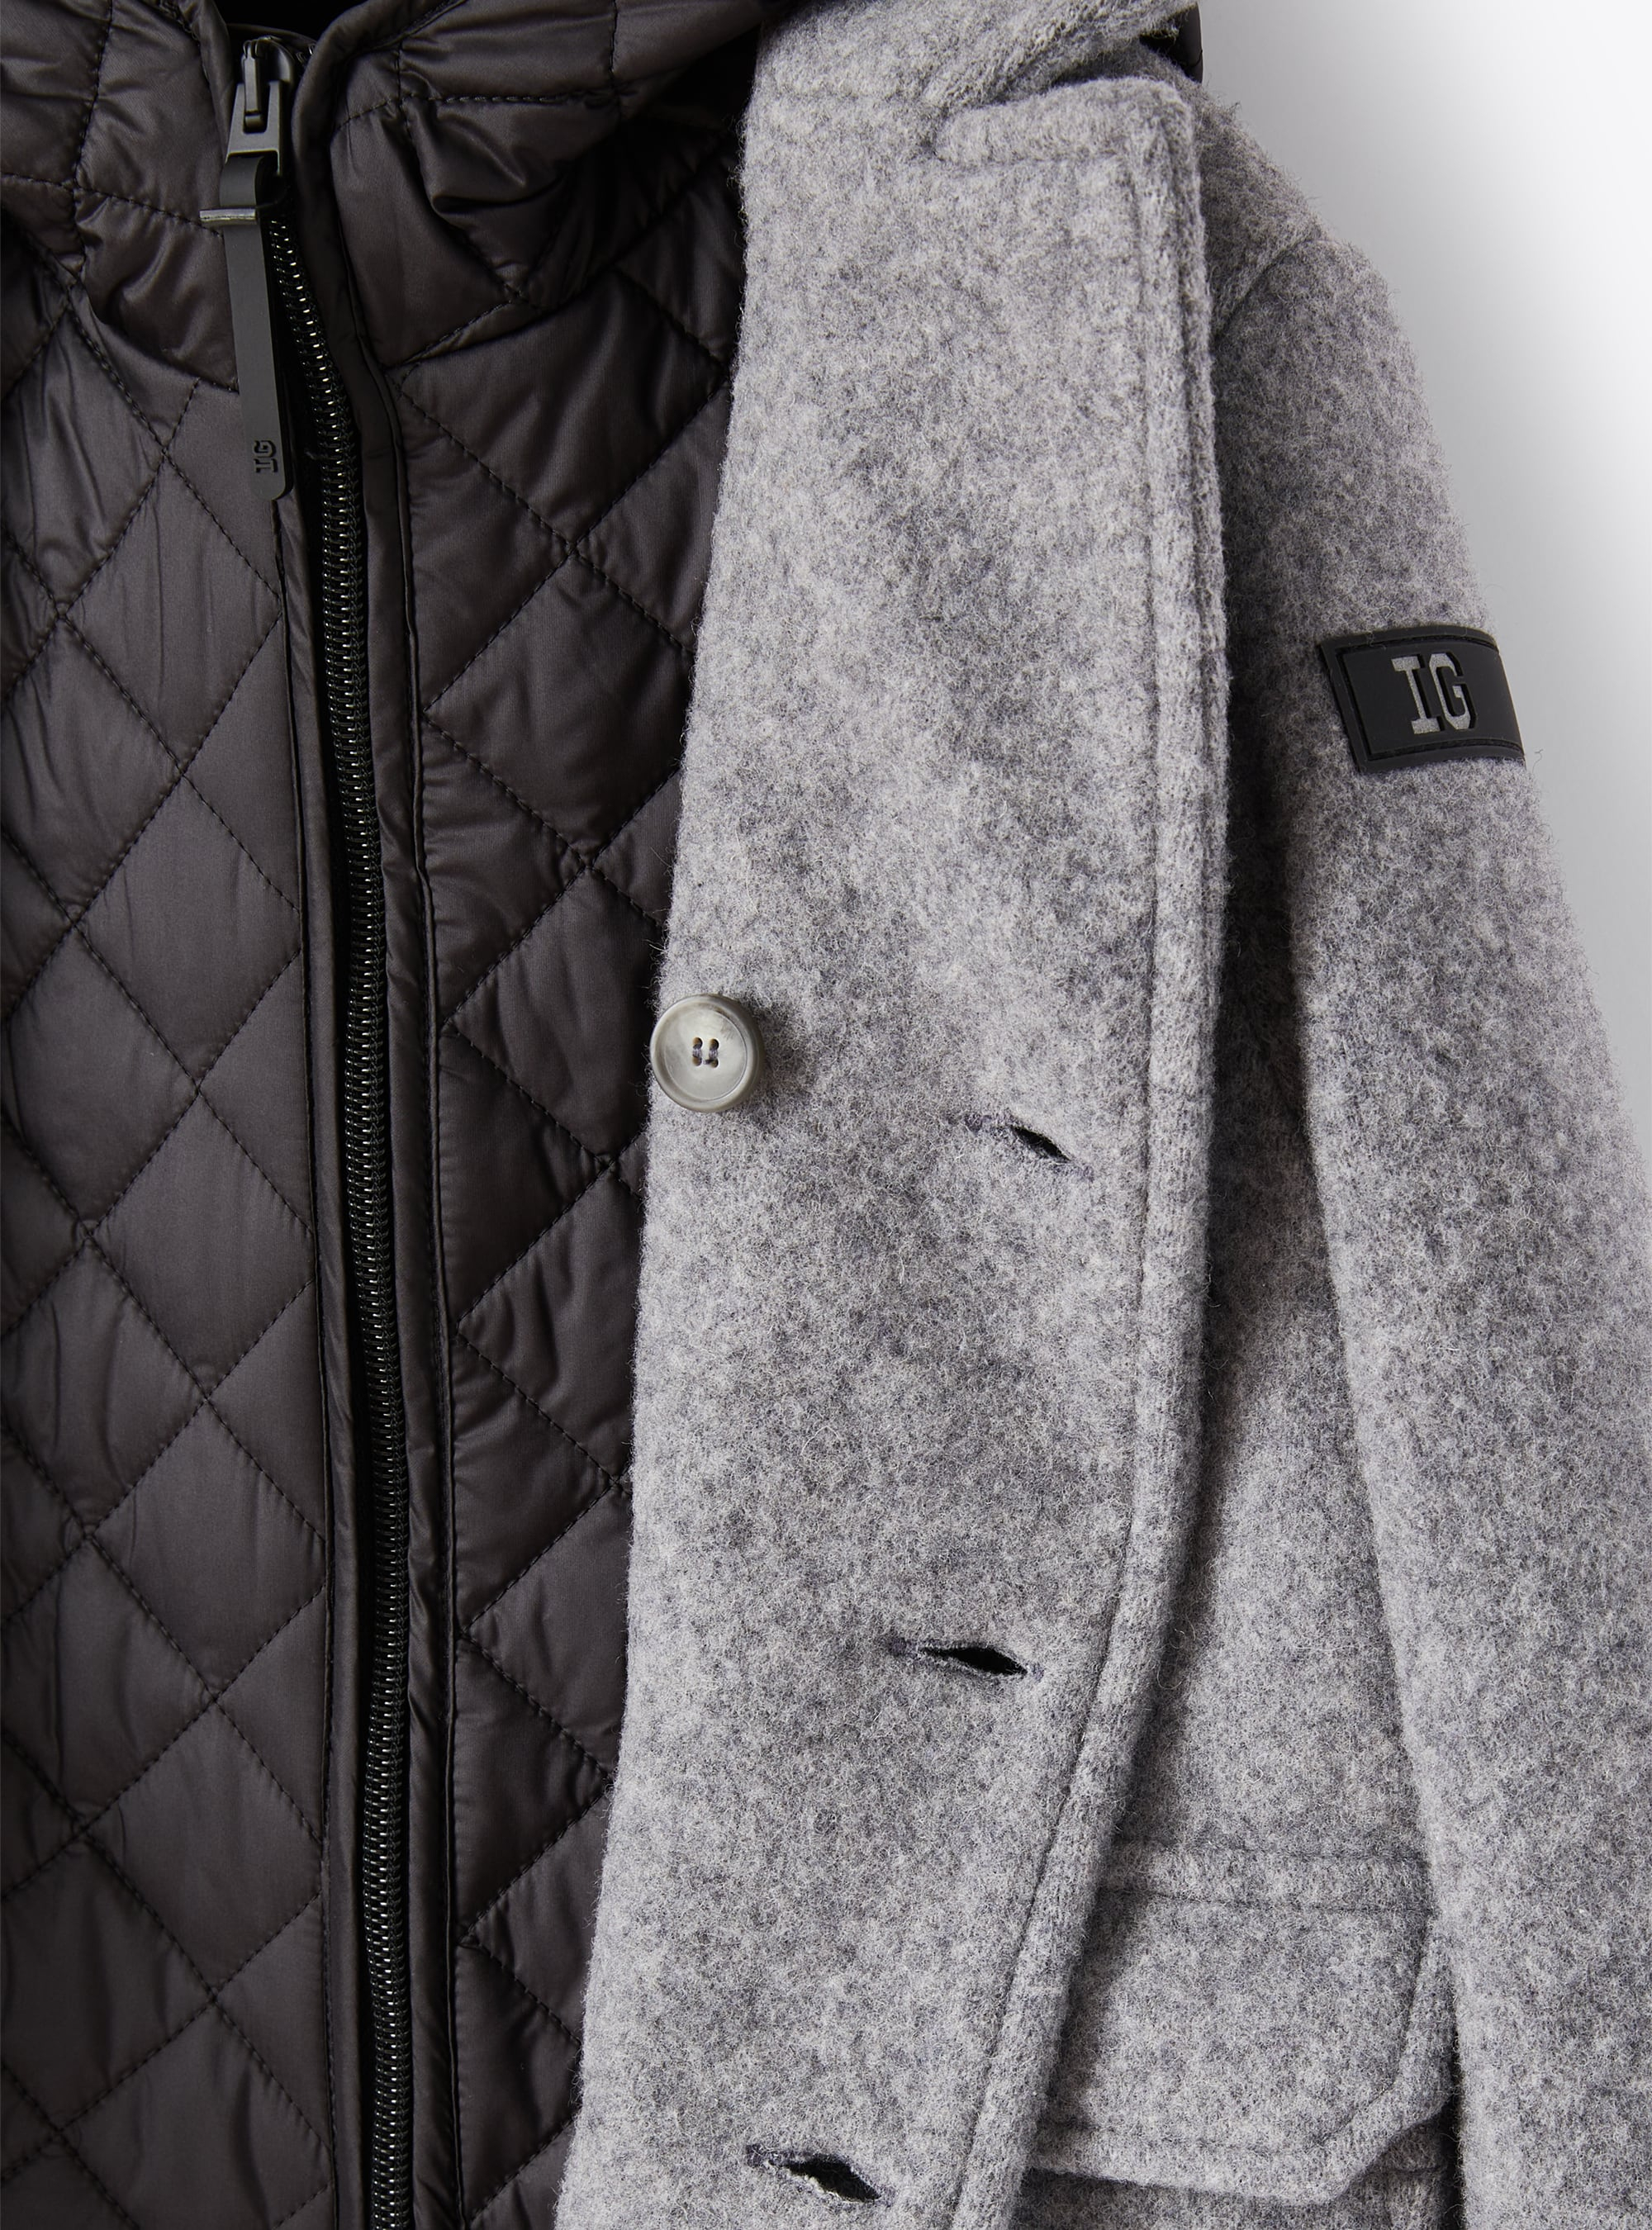 Grey peacoat jacket with gilet - Grey | Il Gufo